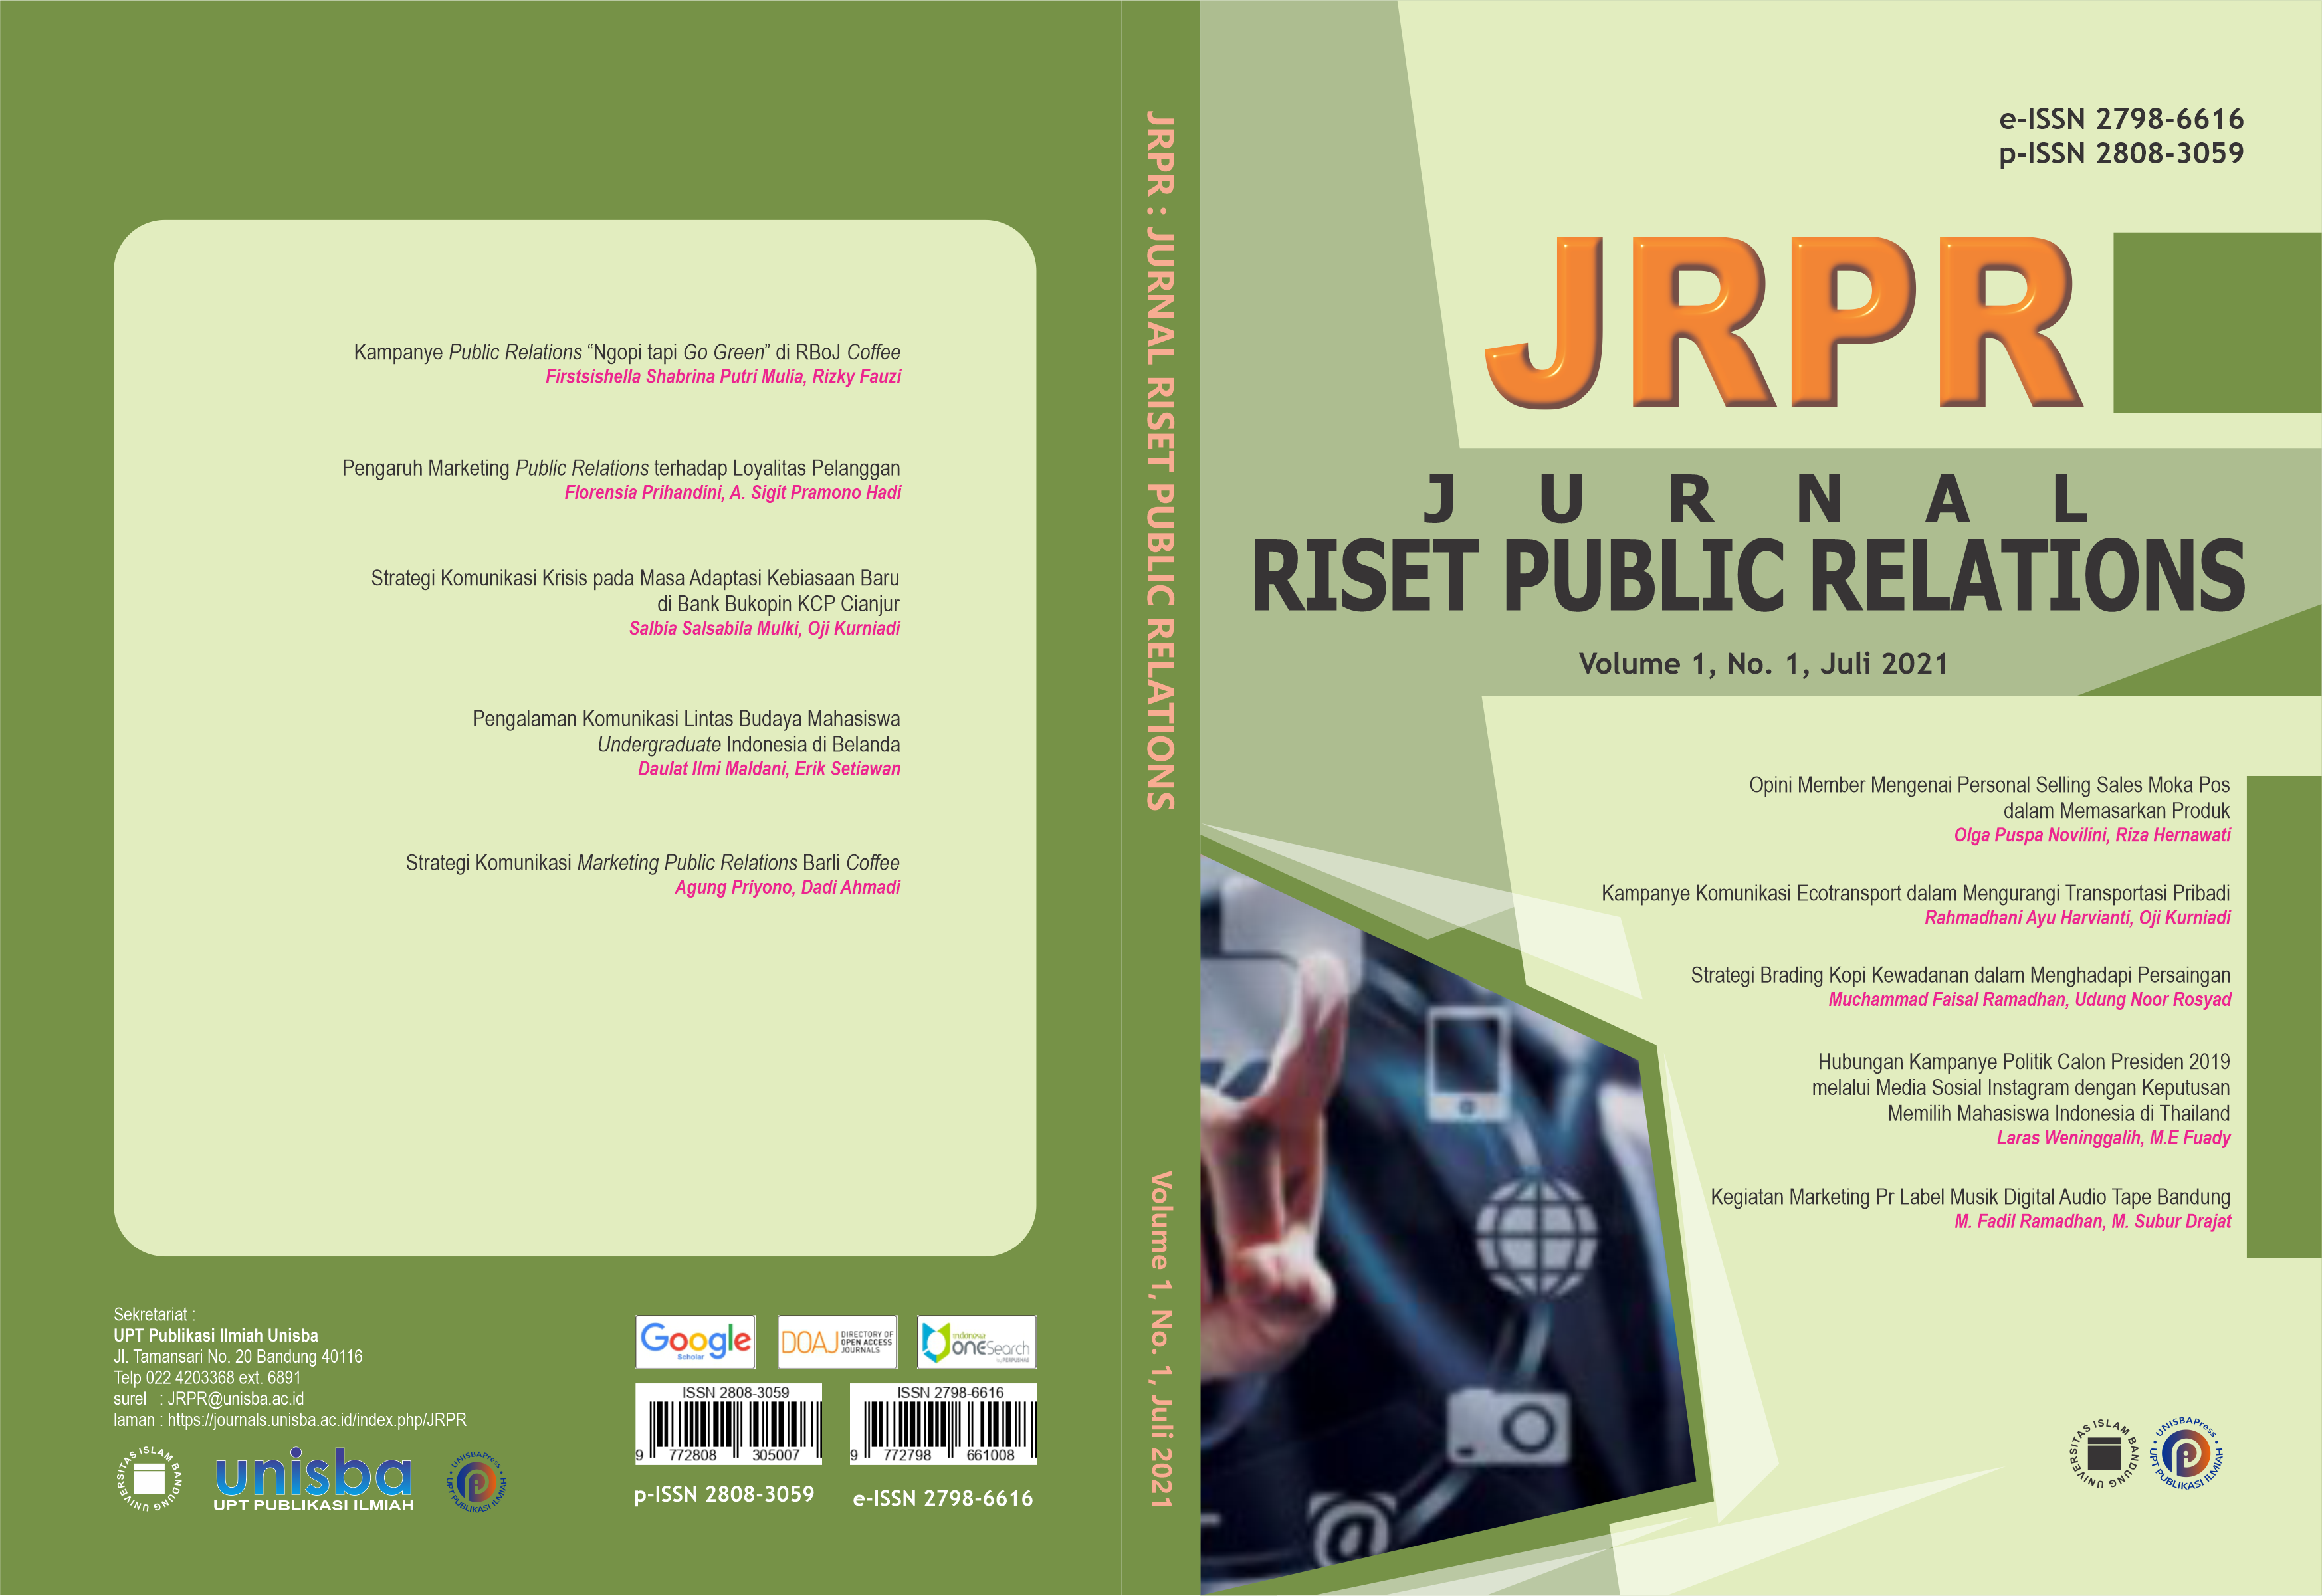 					View Volume 1, No. 1, Juli 2021, Jurnal Riset Public Relations (JRPR)
				